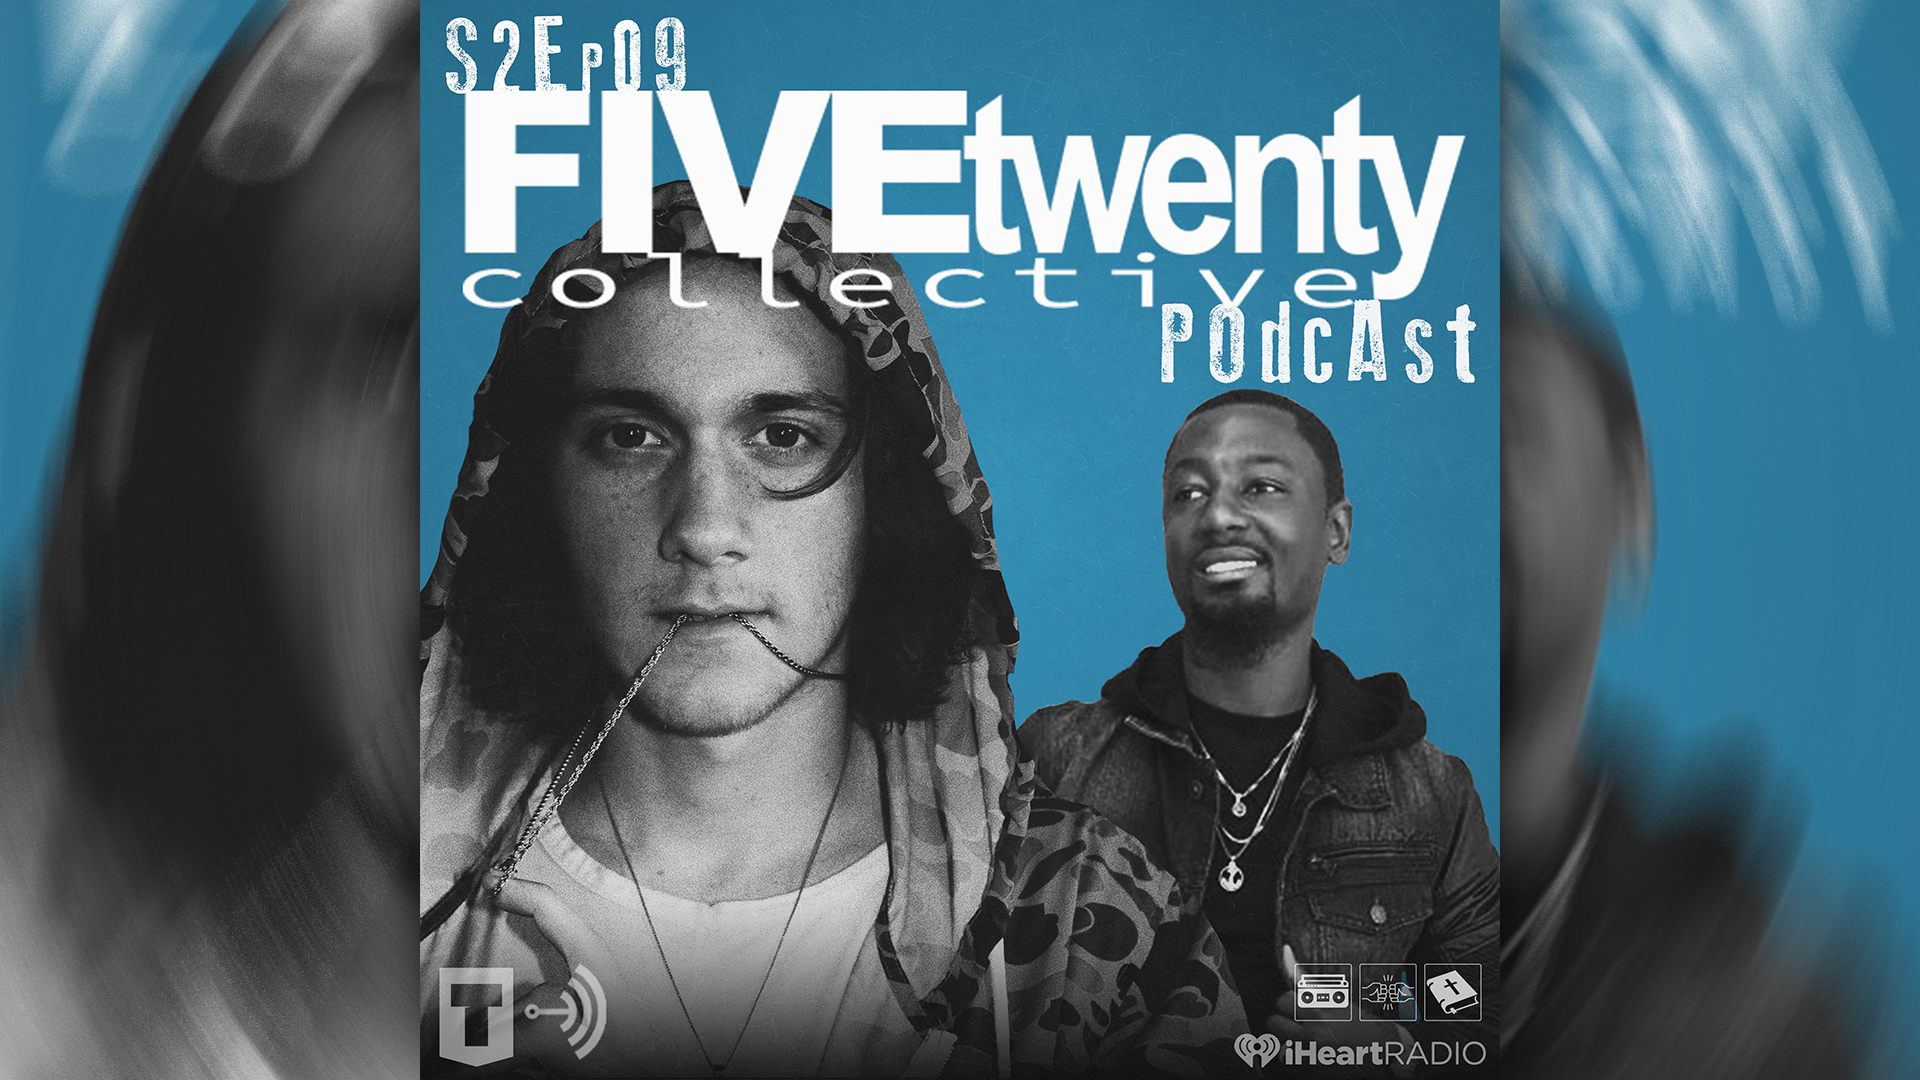 FiveTwenty Collective Podcast: Season Two | Ep. 09 @EricBoston3 @Iam_NateDogg @FiveTwentyCHH